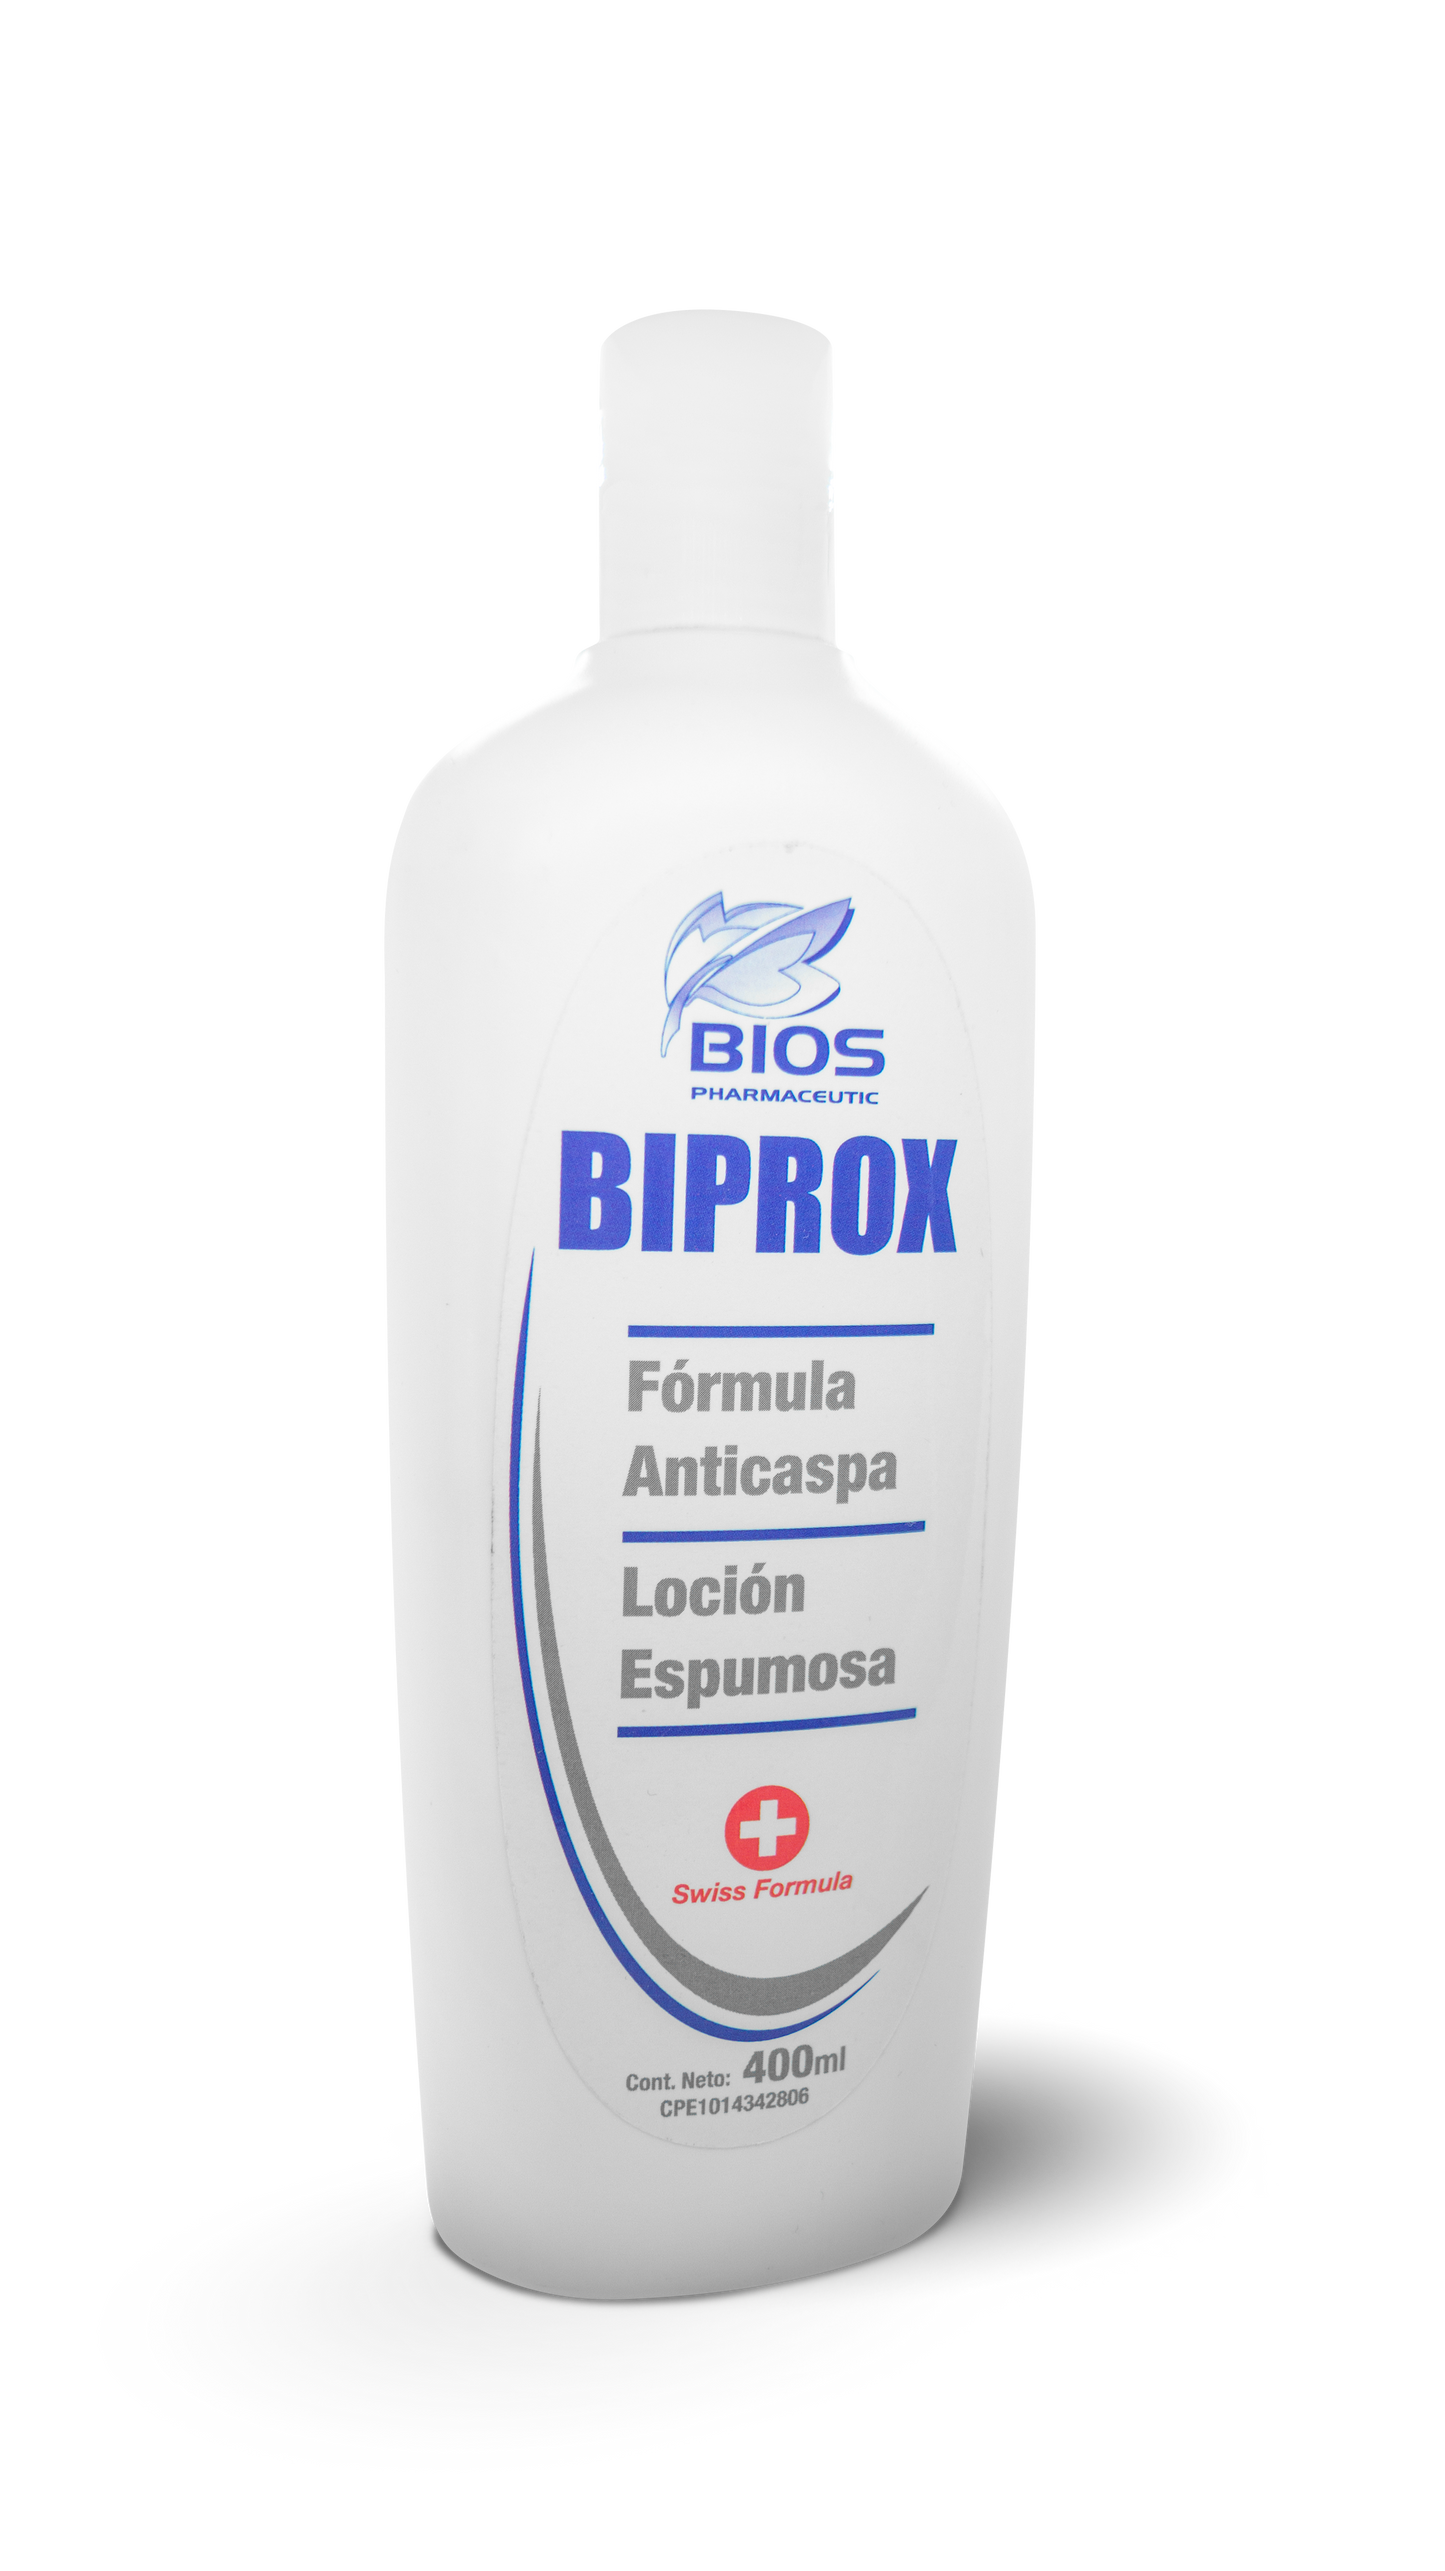 Biprox fórmula anticaspa 400mL